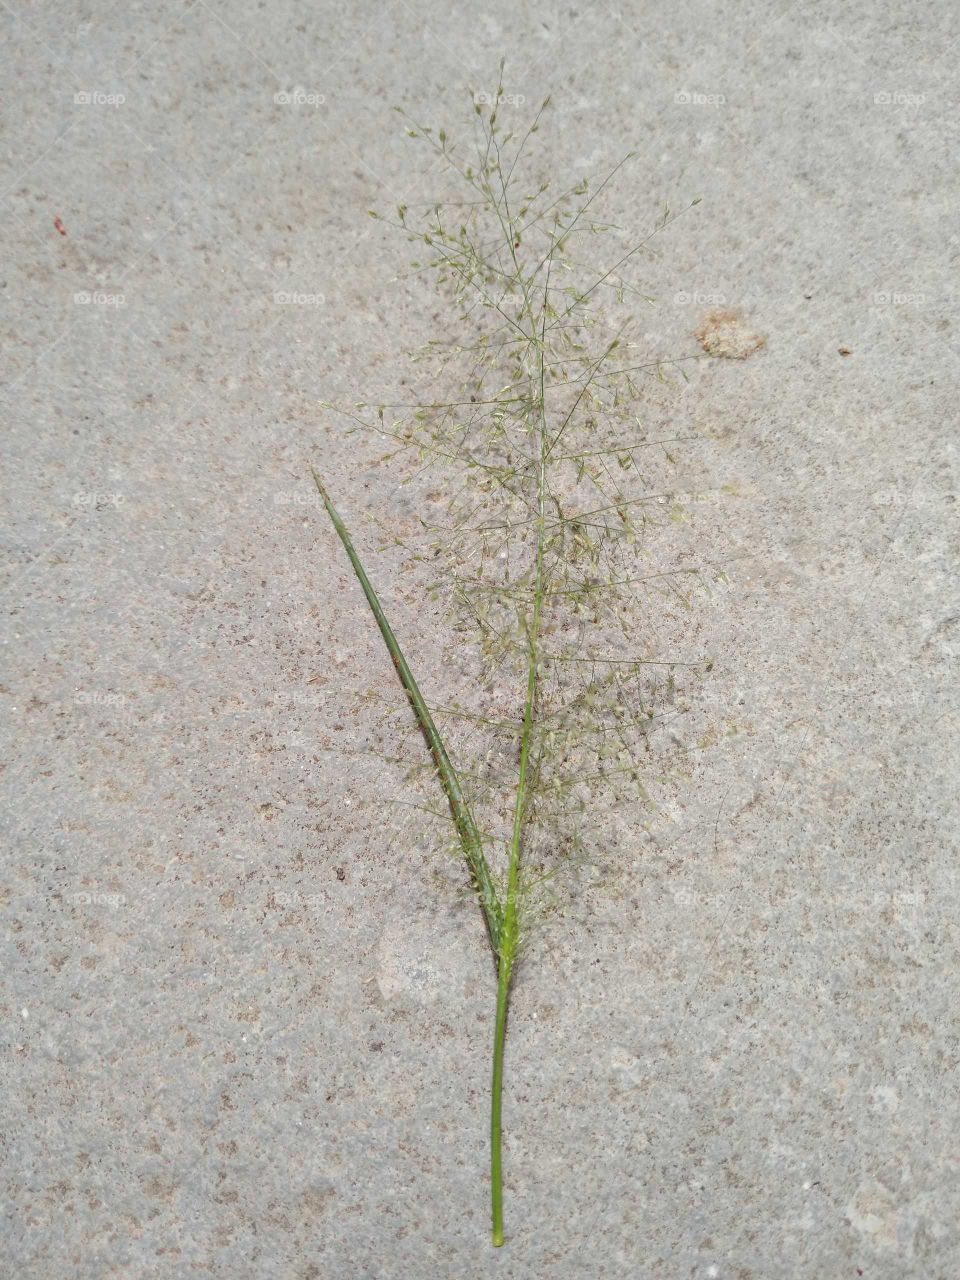 a grass flower in my garden